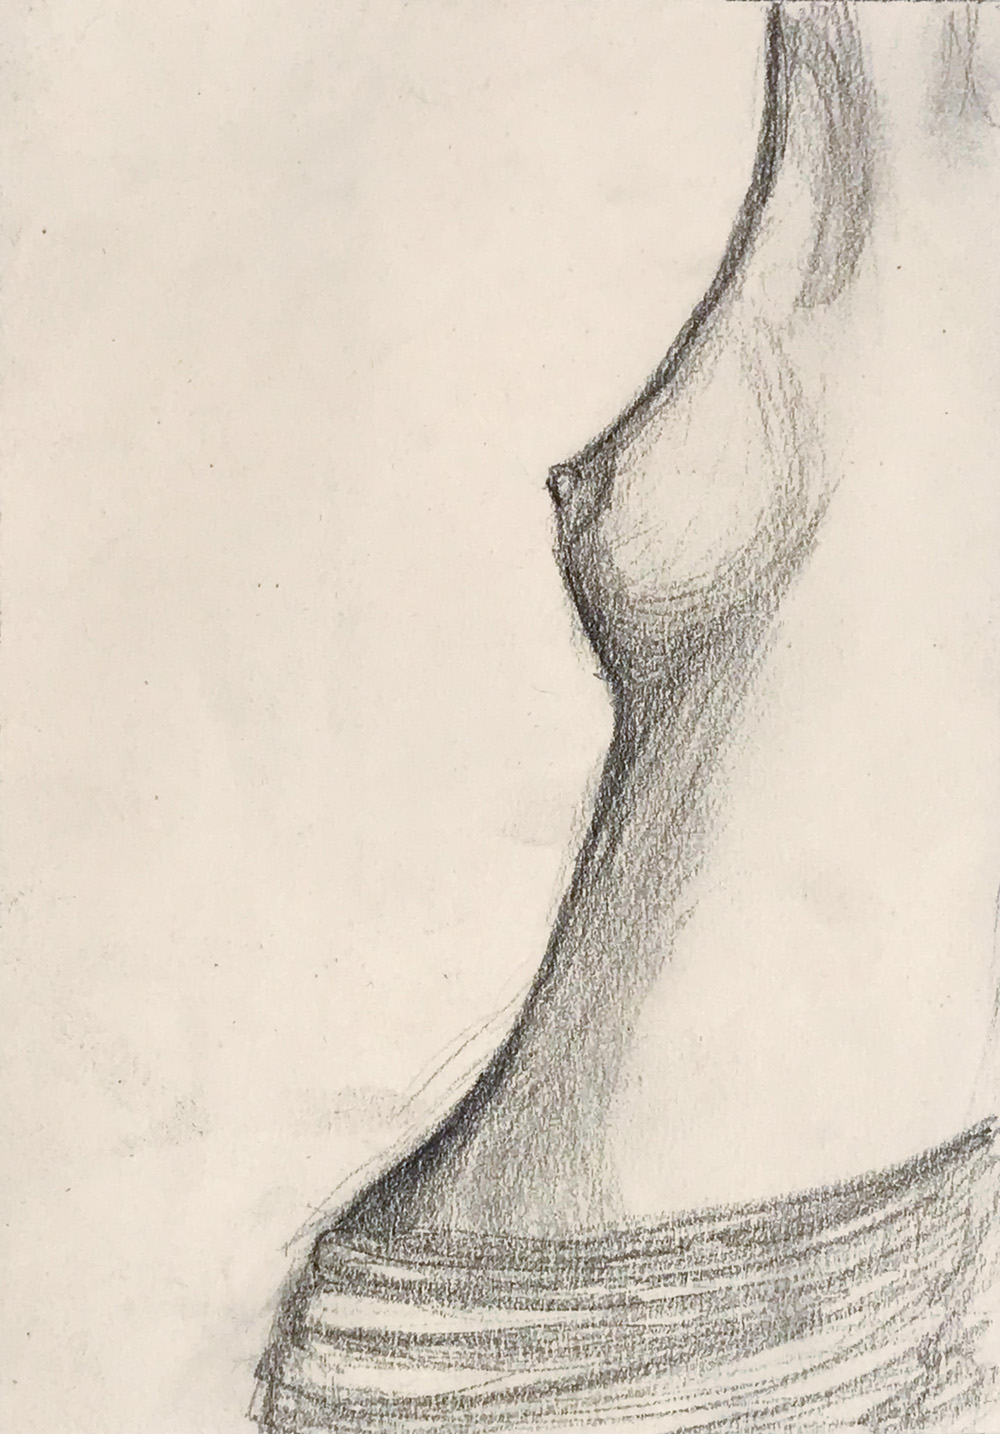 Indira-Cesarine-Silhouette-Graphite-on-paper-1987.jpg